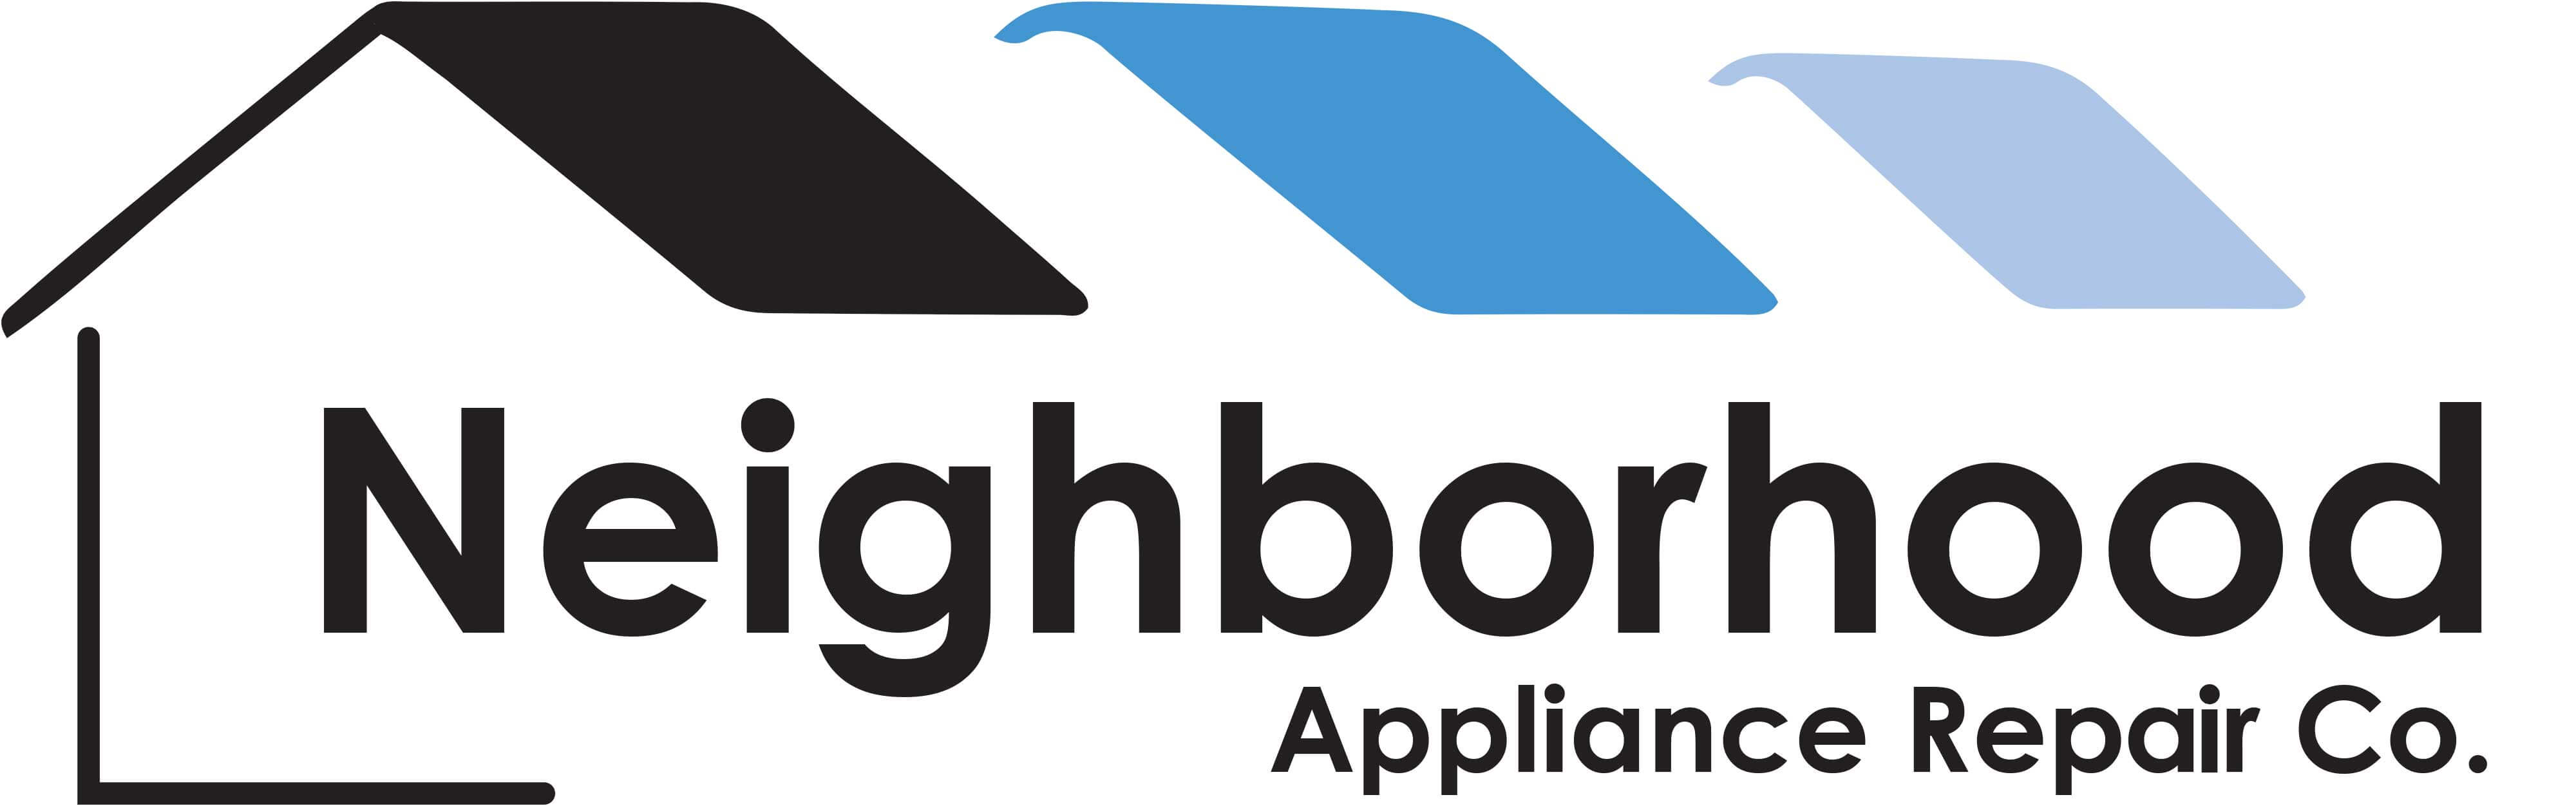 Neighborhood Appliance Repair Co. Logo